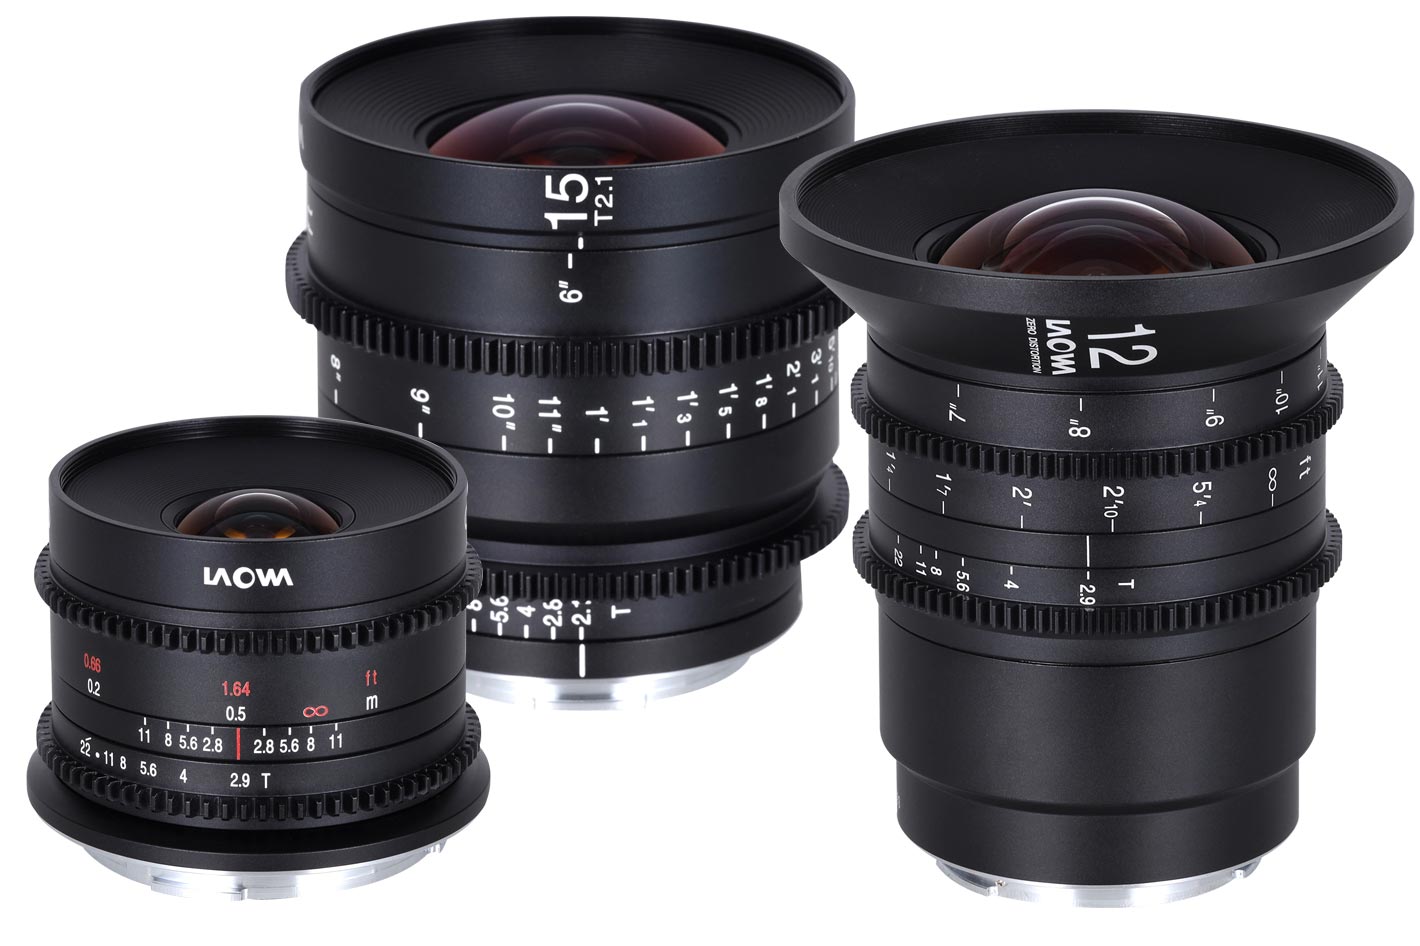 Three new Laowa cinema lenses for Canon RF mount